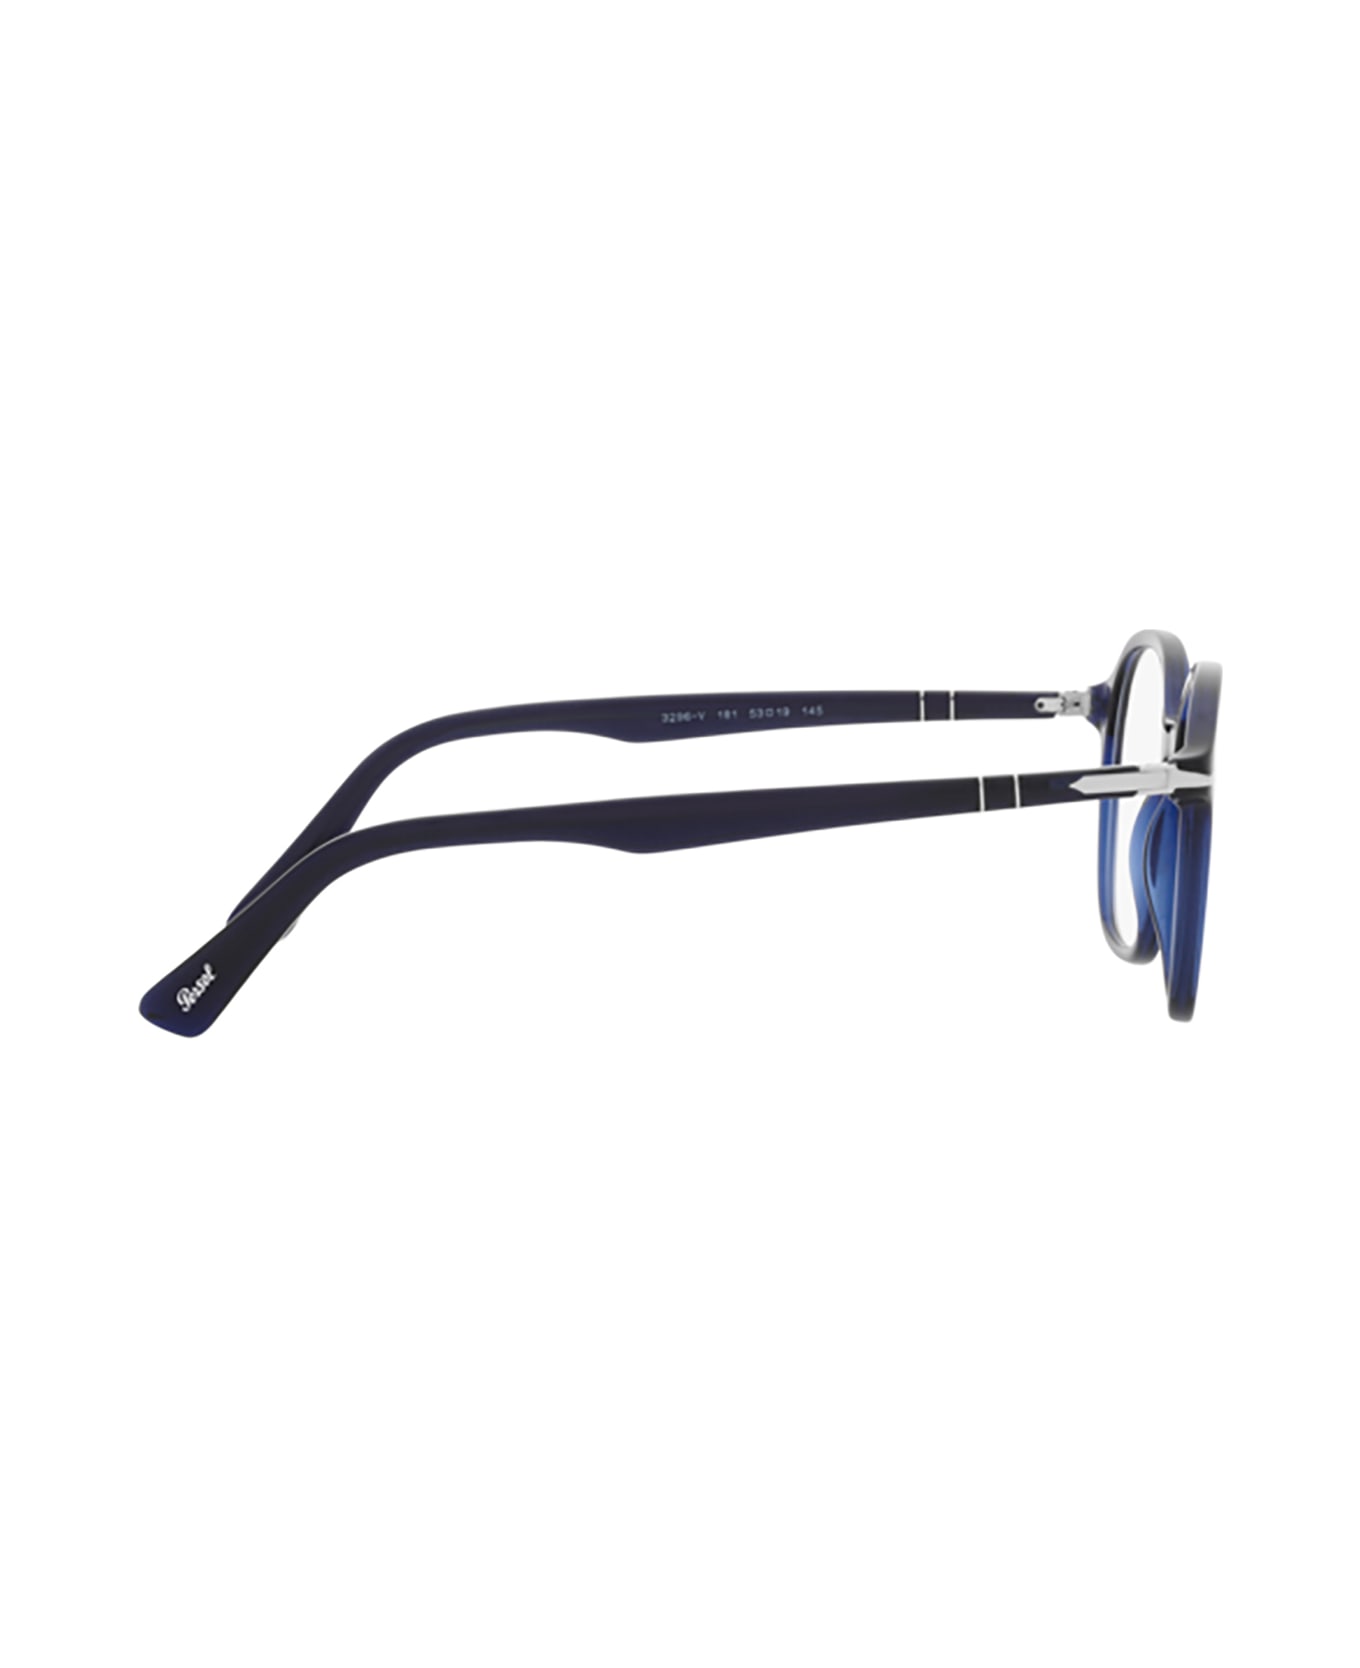 Persol Po3296v Blue Glasses - Blue